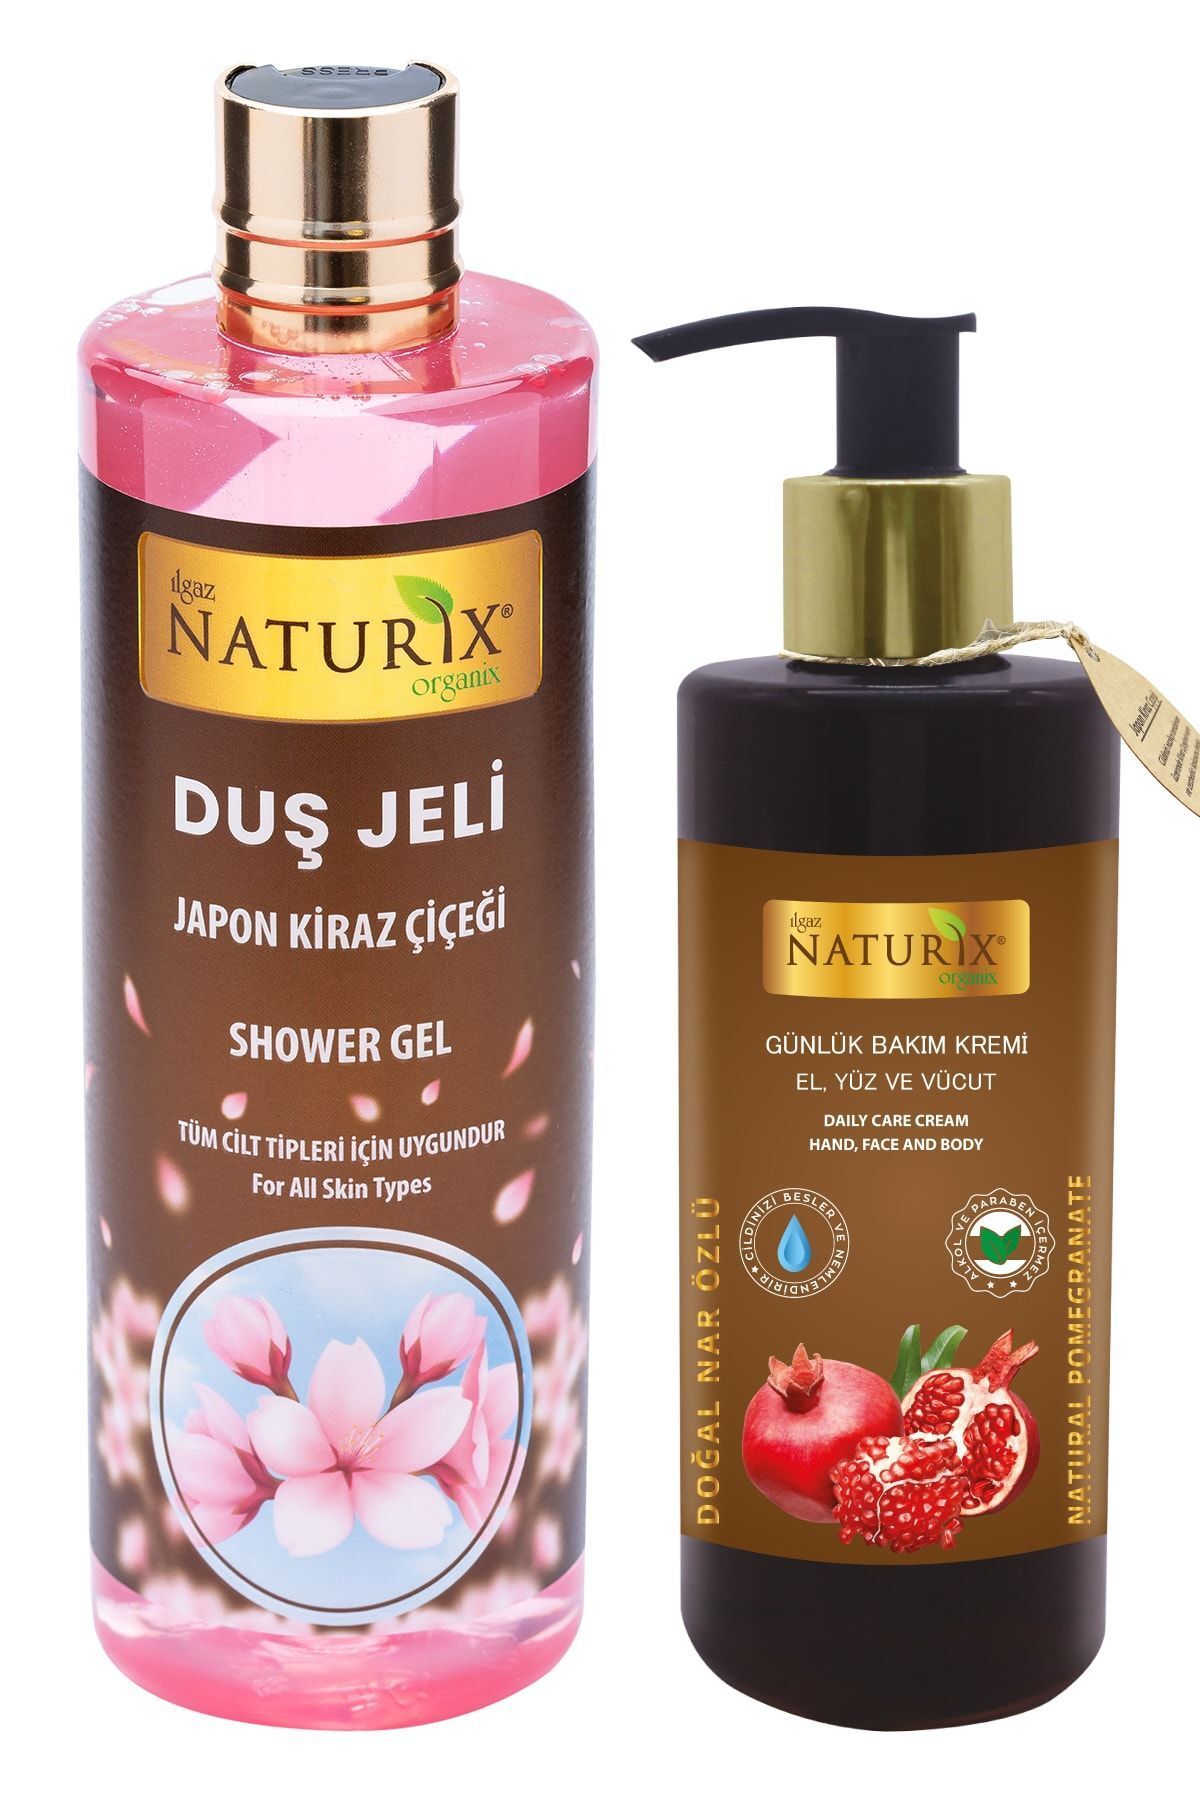 Ilgaz Naturix Organix 2'li Set Aromatik Japon Kirazı Duş Jeli 400 Ml + Nar Özlü C Vitaminli El Yüz Vücut Kremi 250 Ml